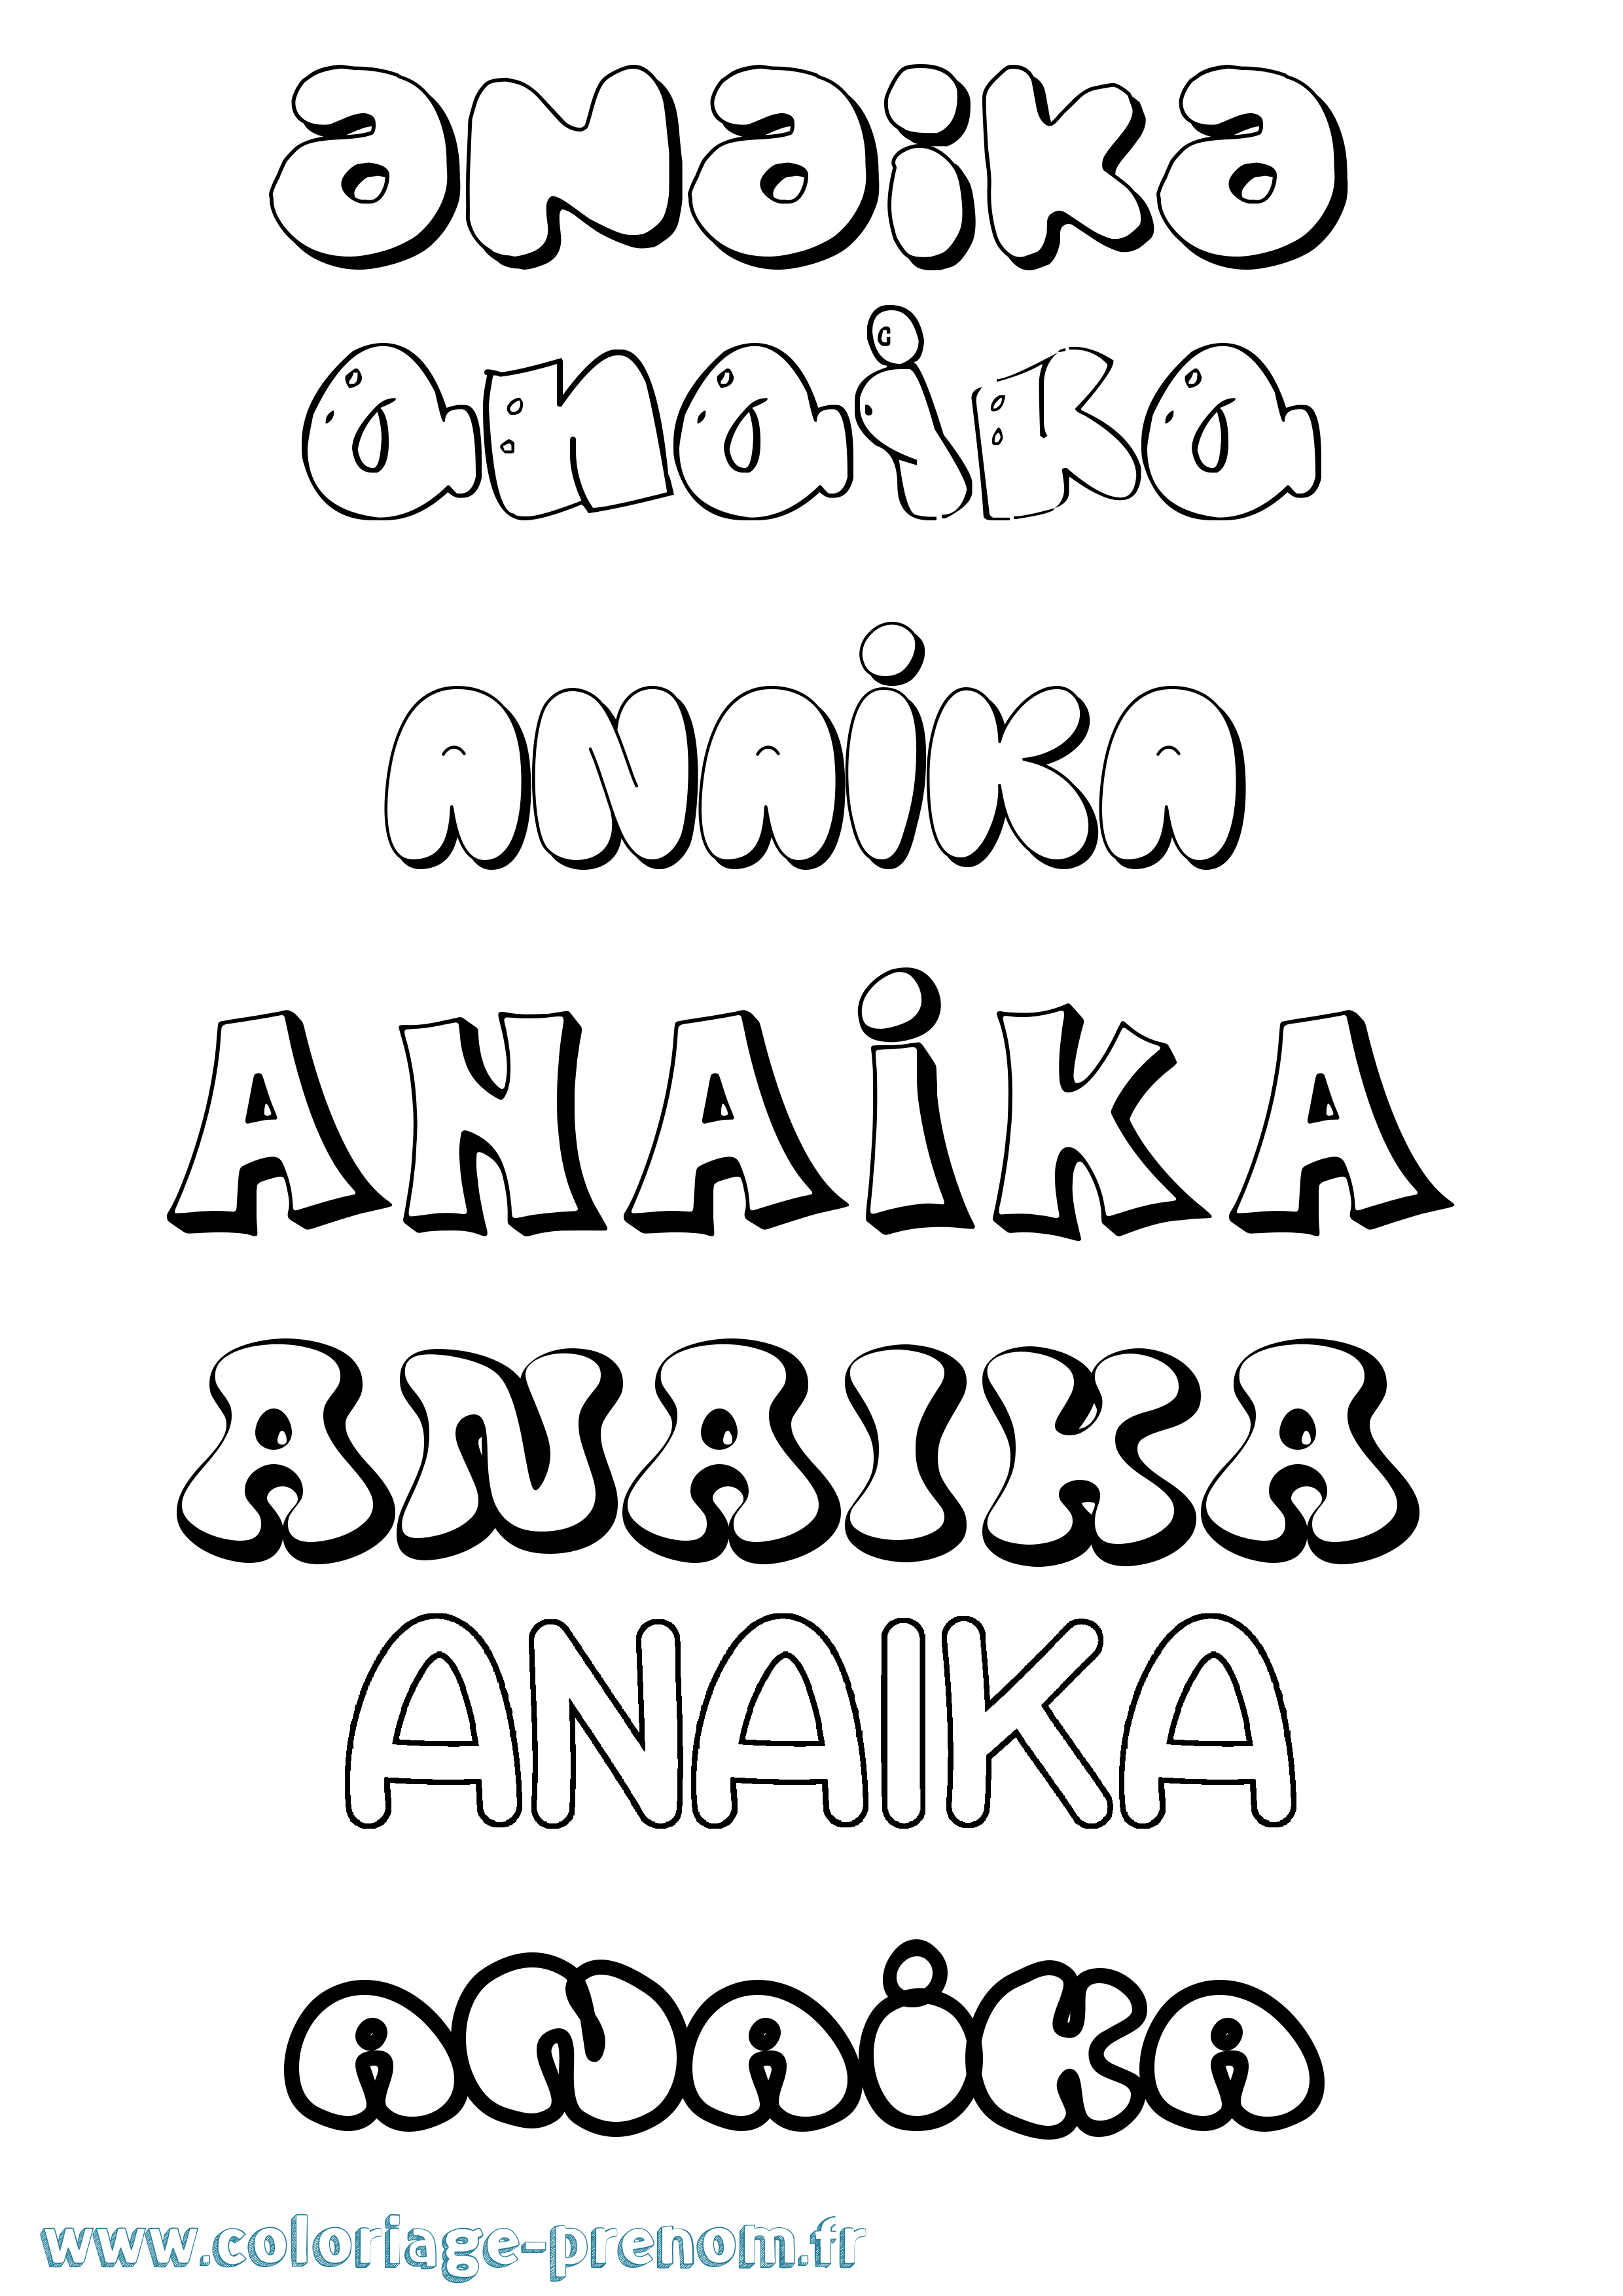 Coloriage prénom Anaika Bubble